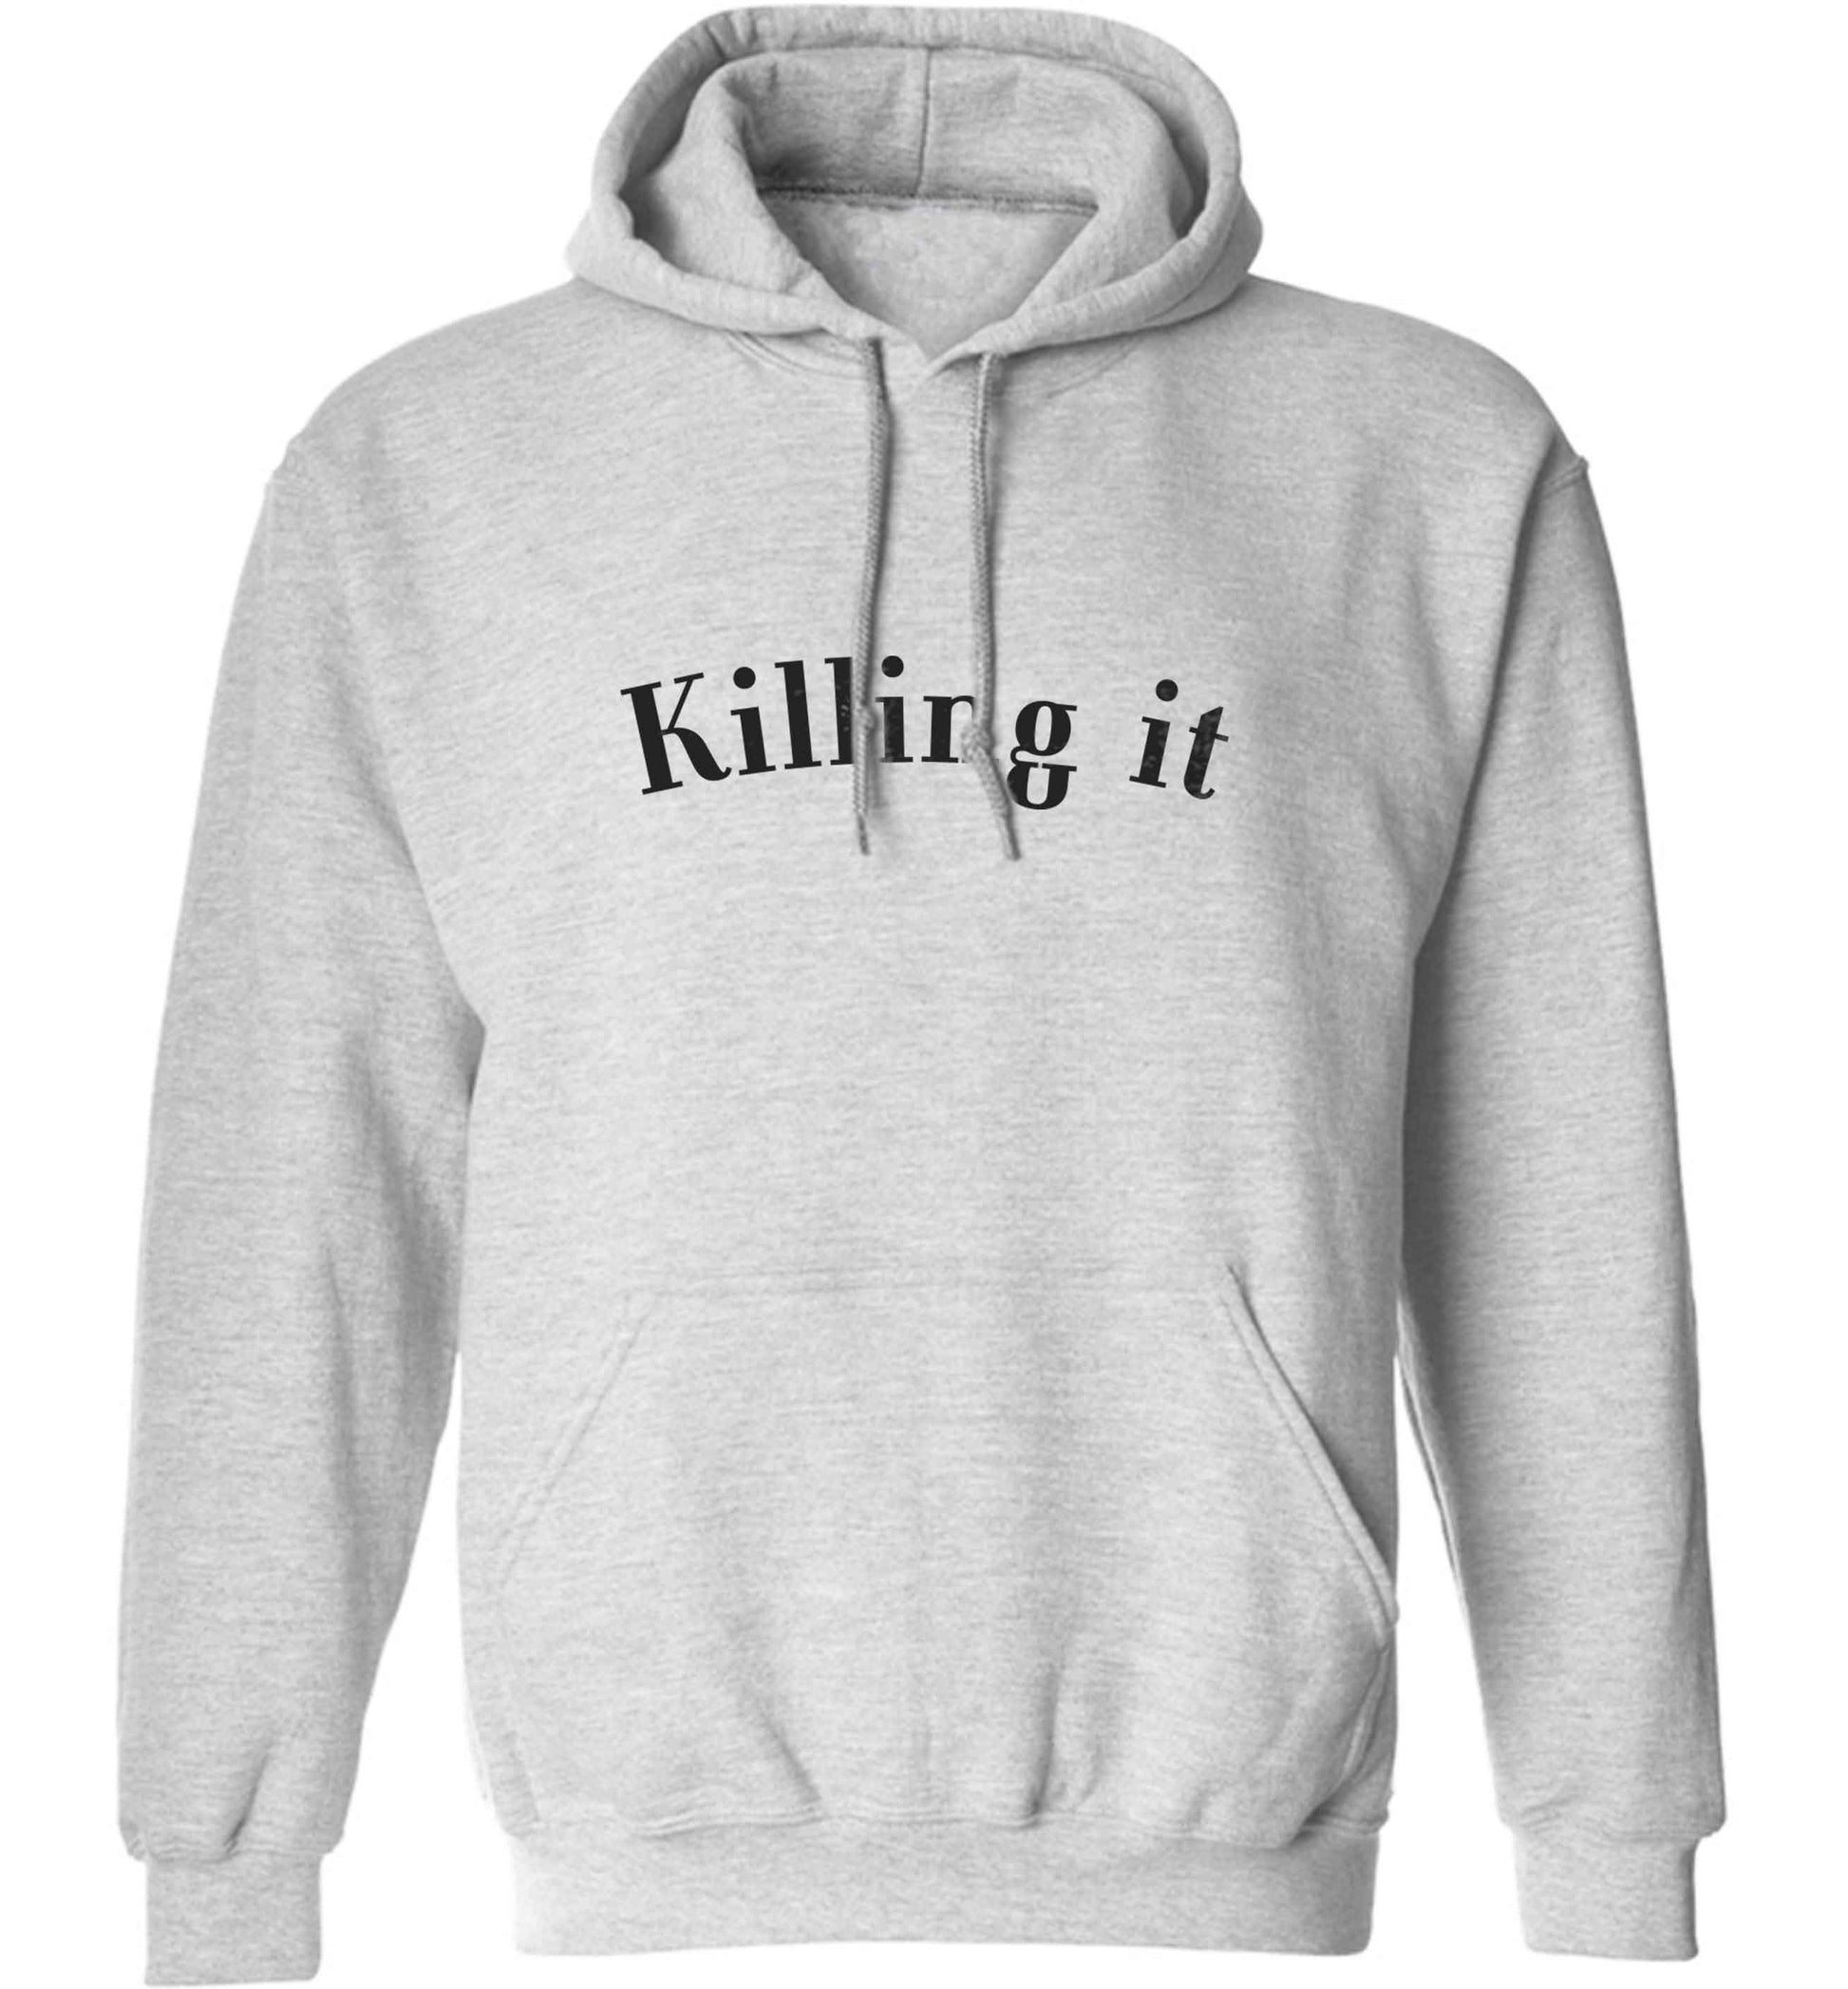 Killing it adults unisex grey hoodie 2XL